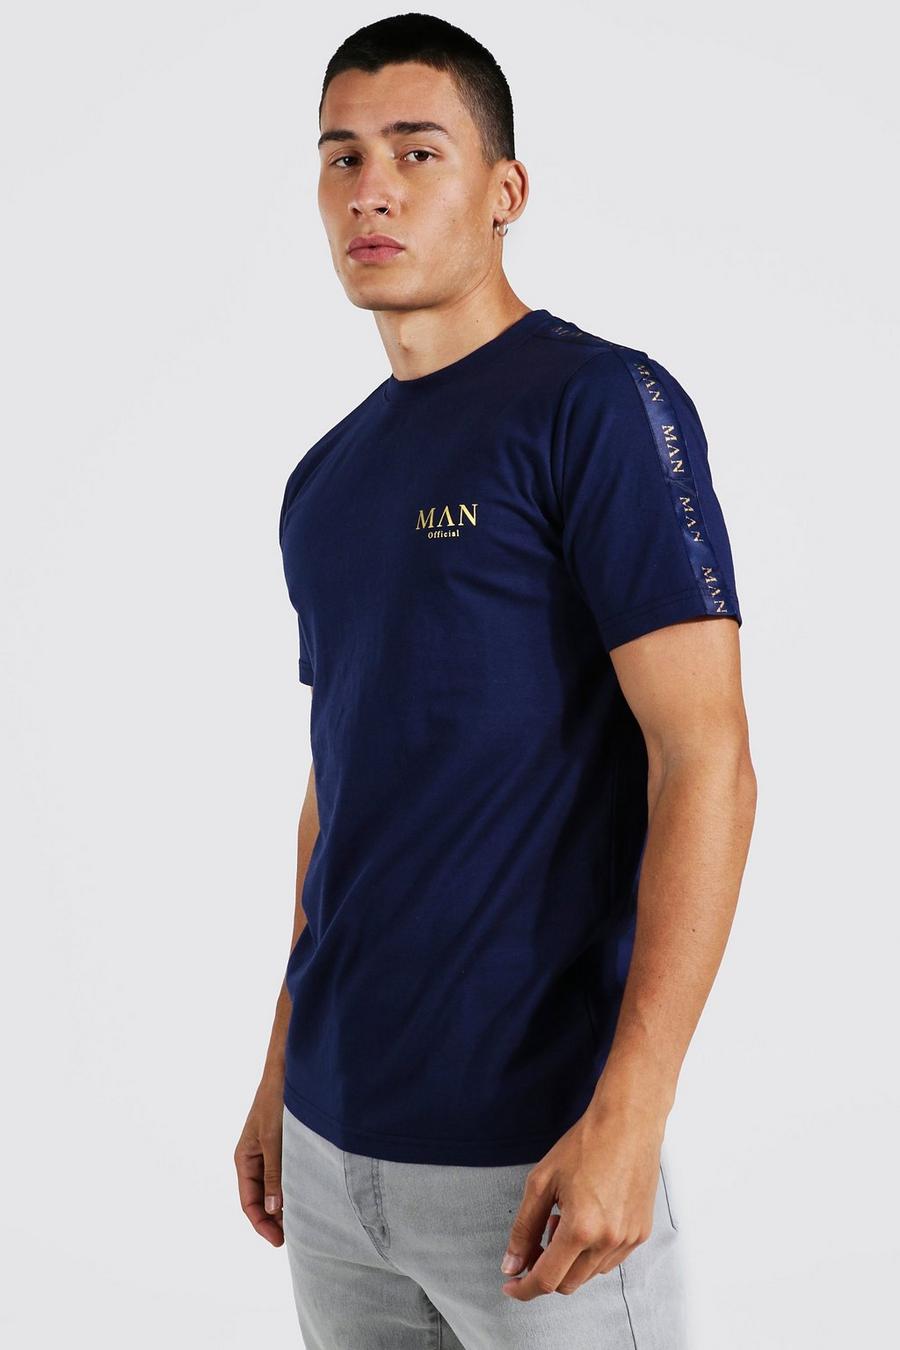 T-shirt Man con logo color oro e striscia laterale, Navy azul marino image number 1